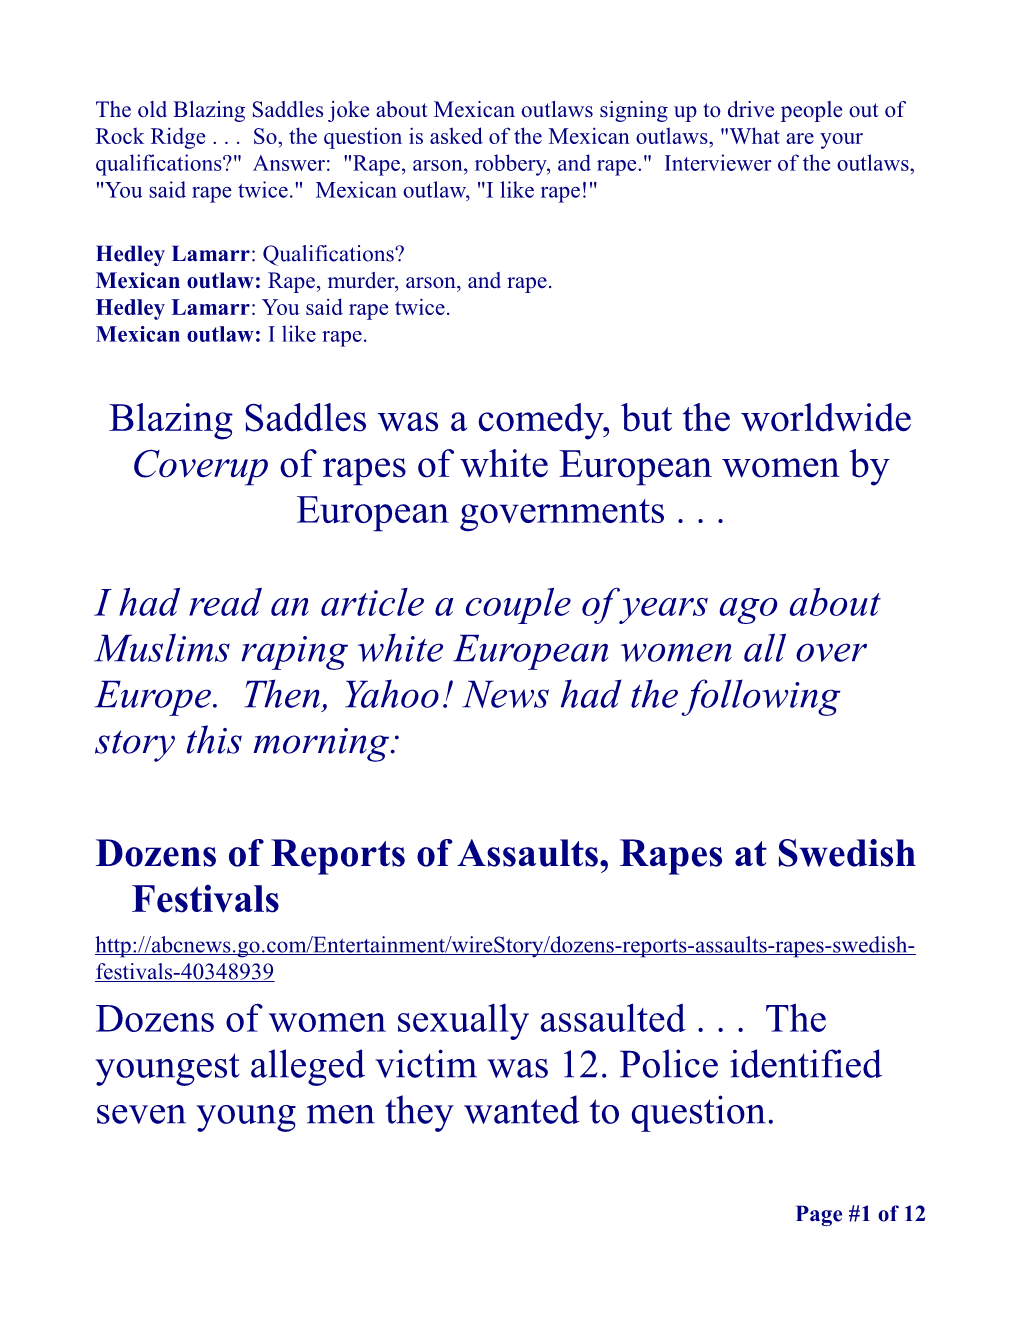 Dozens of Reports of Assaults, Rapes at Swedish Festivals